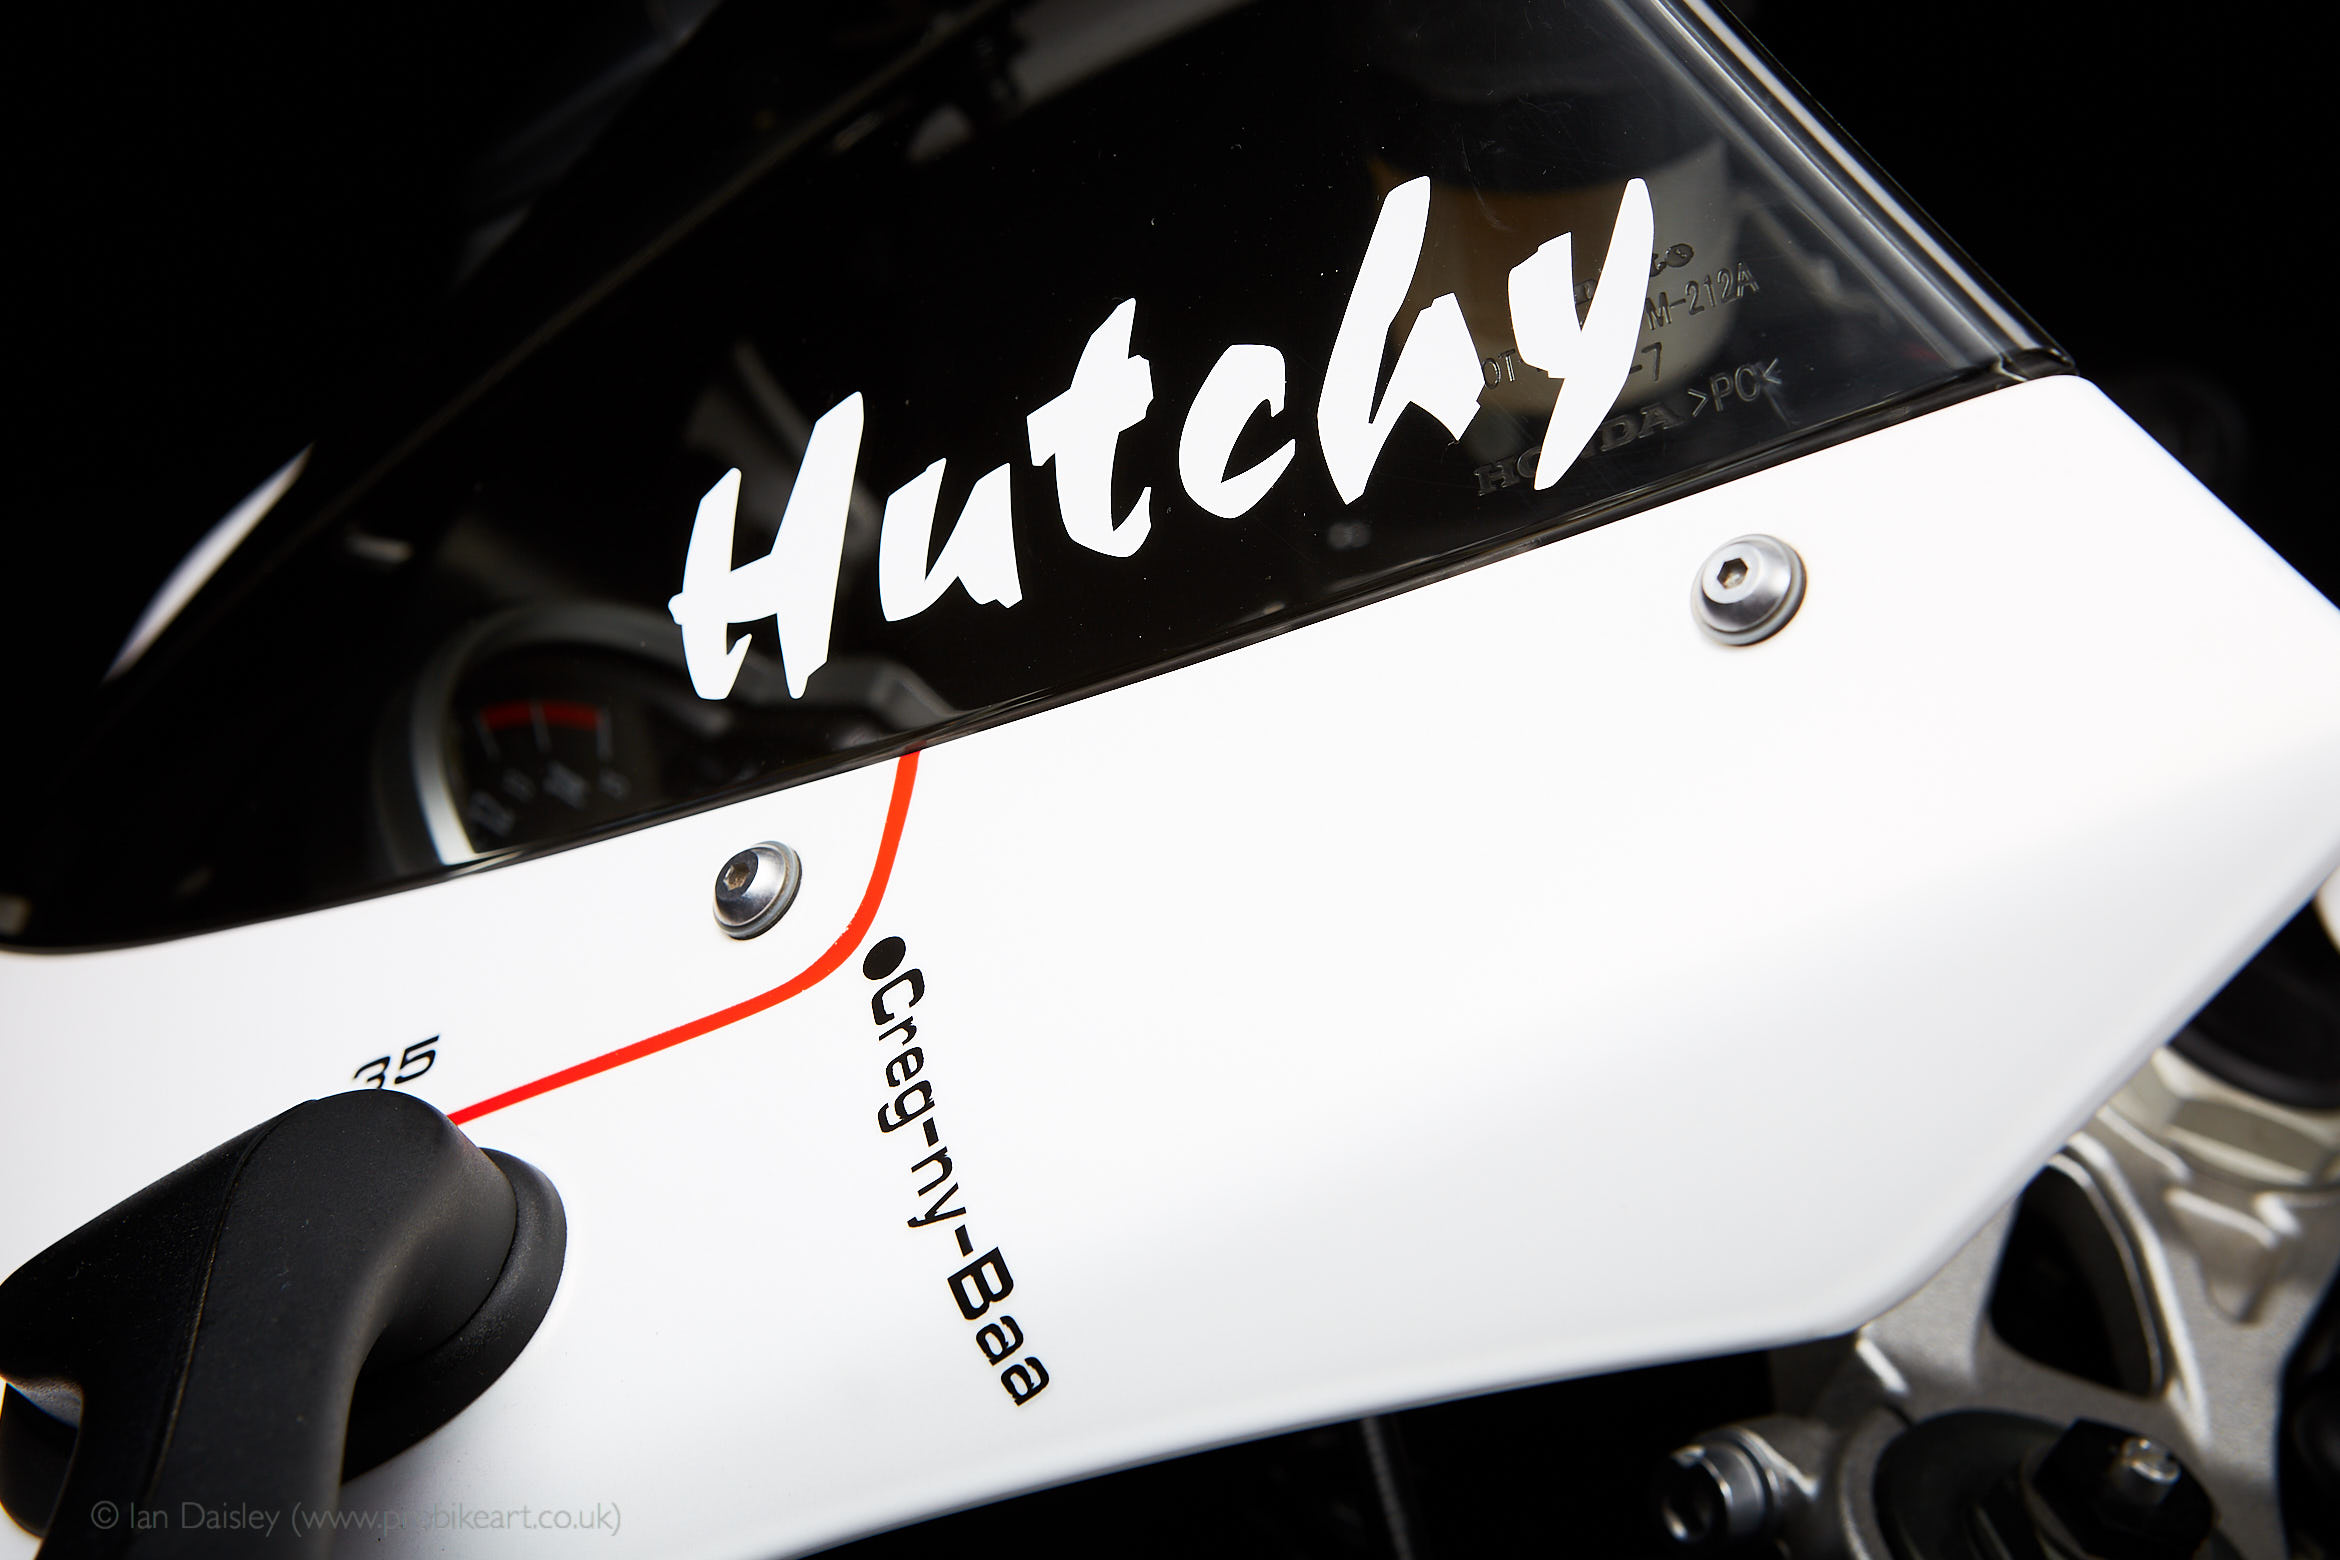 Honda CBR1000RR 2010 TT Ian Hutchinson Replica